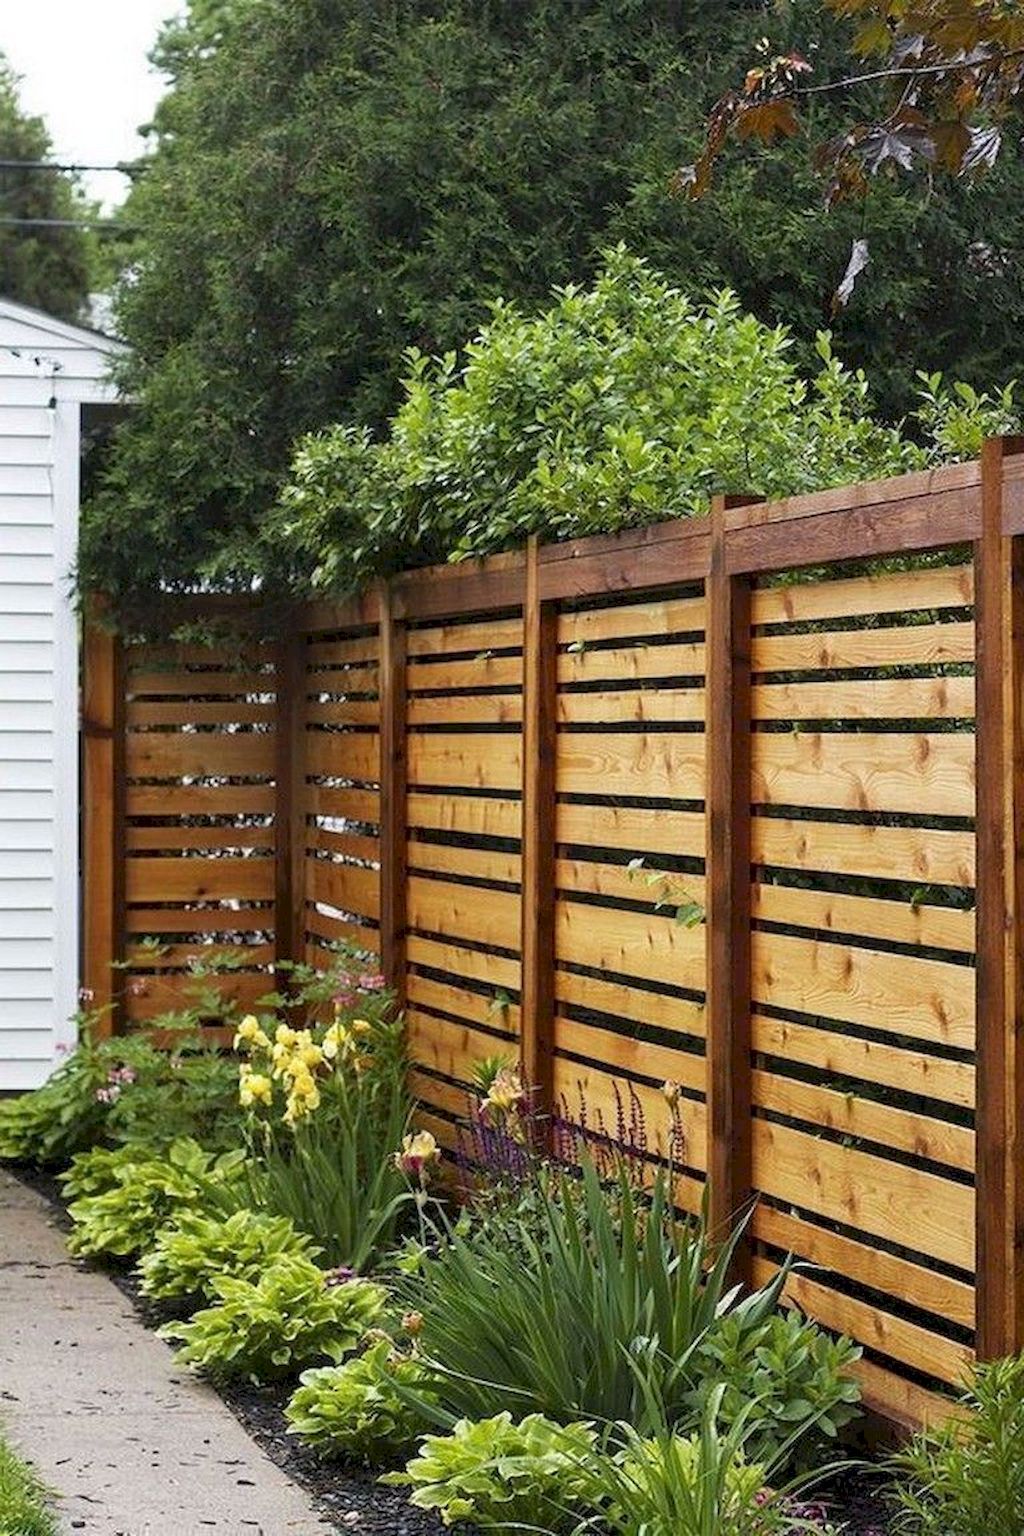 Trendy Ideas backyard privacy fence diy
patio